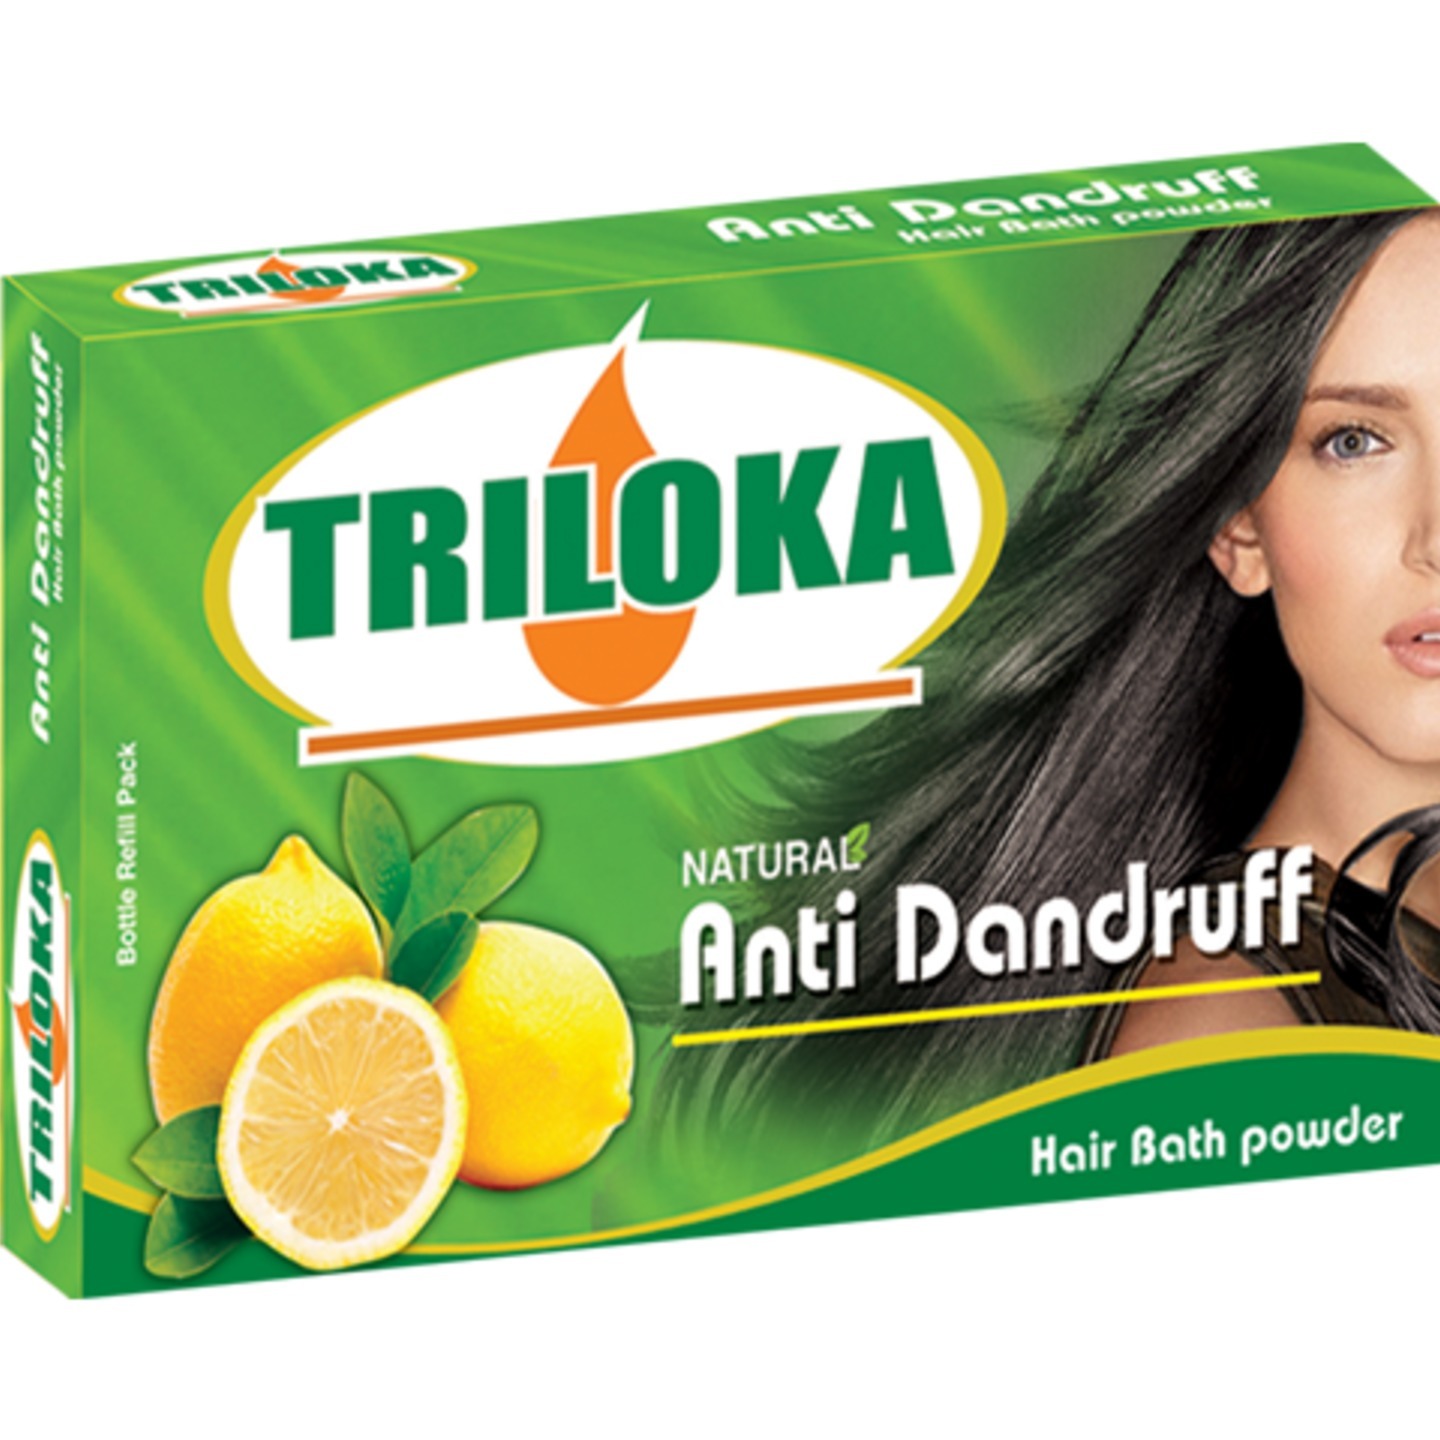 New Triloka Anti Dandruff Head Bathing Powder Shampoo Powder Refill packs - 1 case